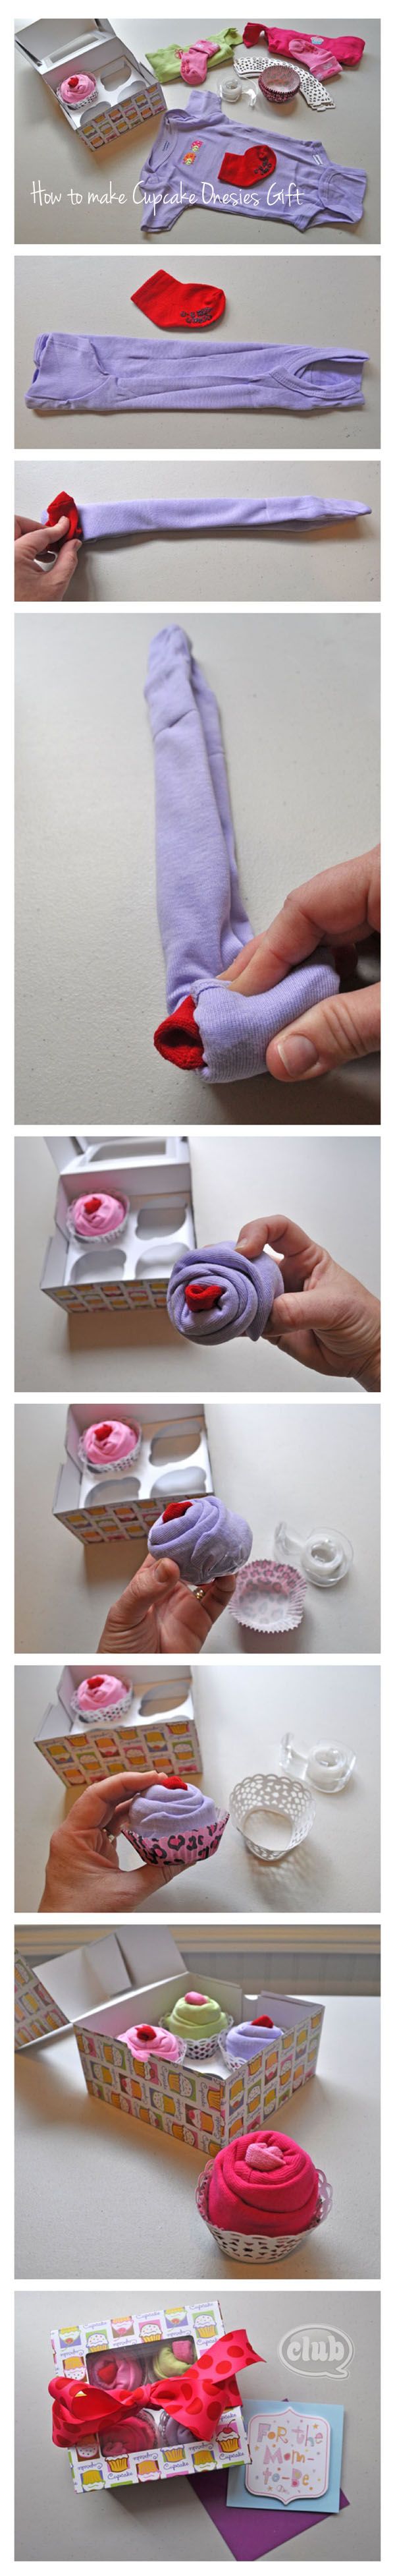 Cupcake onesies baby gift